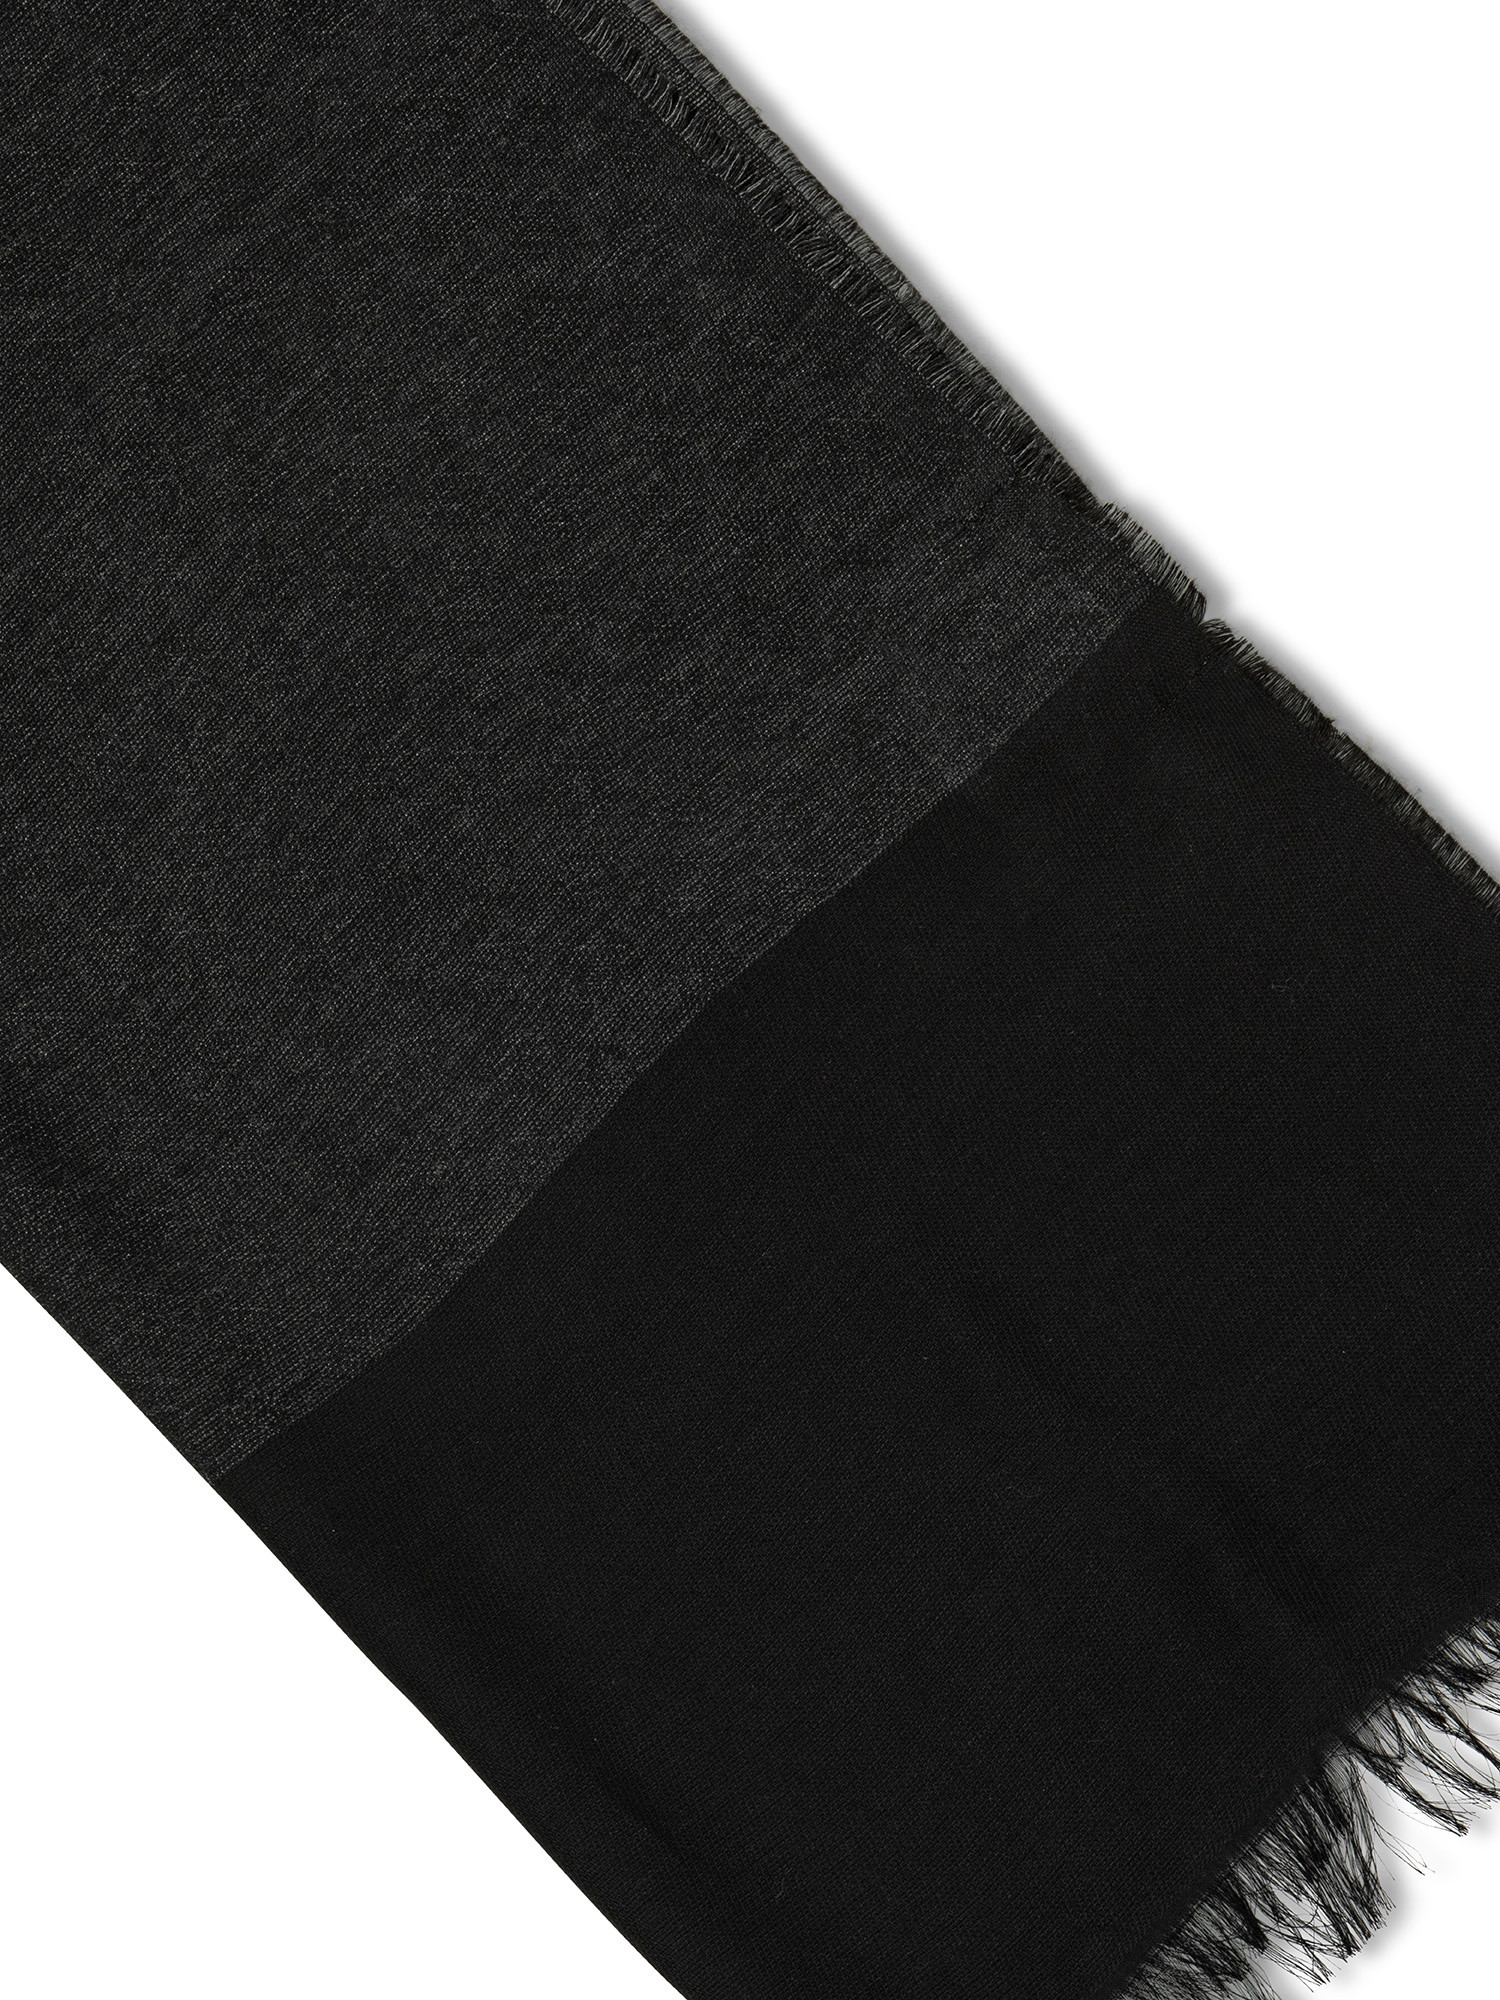 Luca D'Altieri - Scarf with tie design, Black, large image number 1